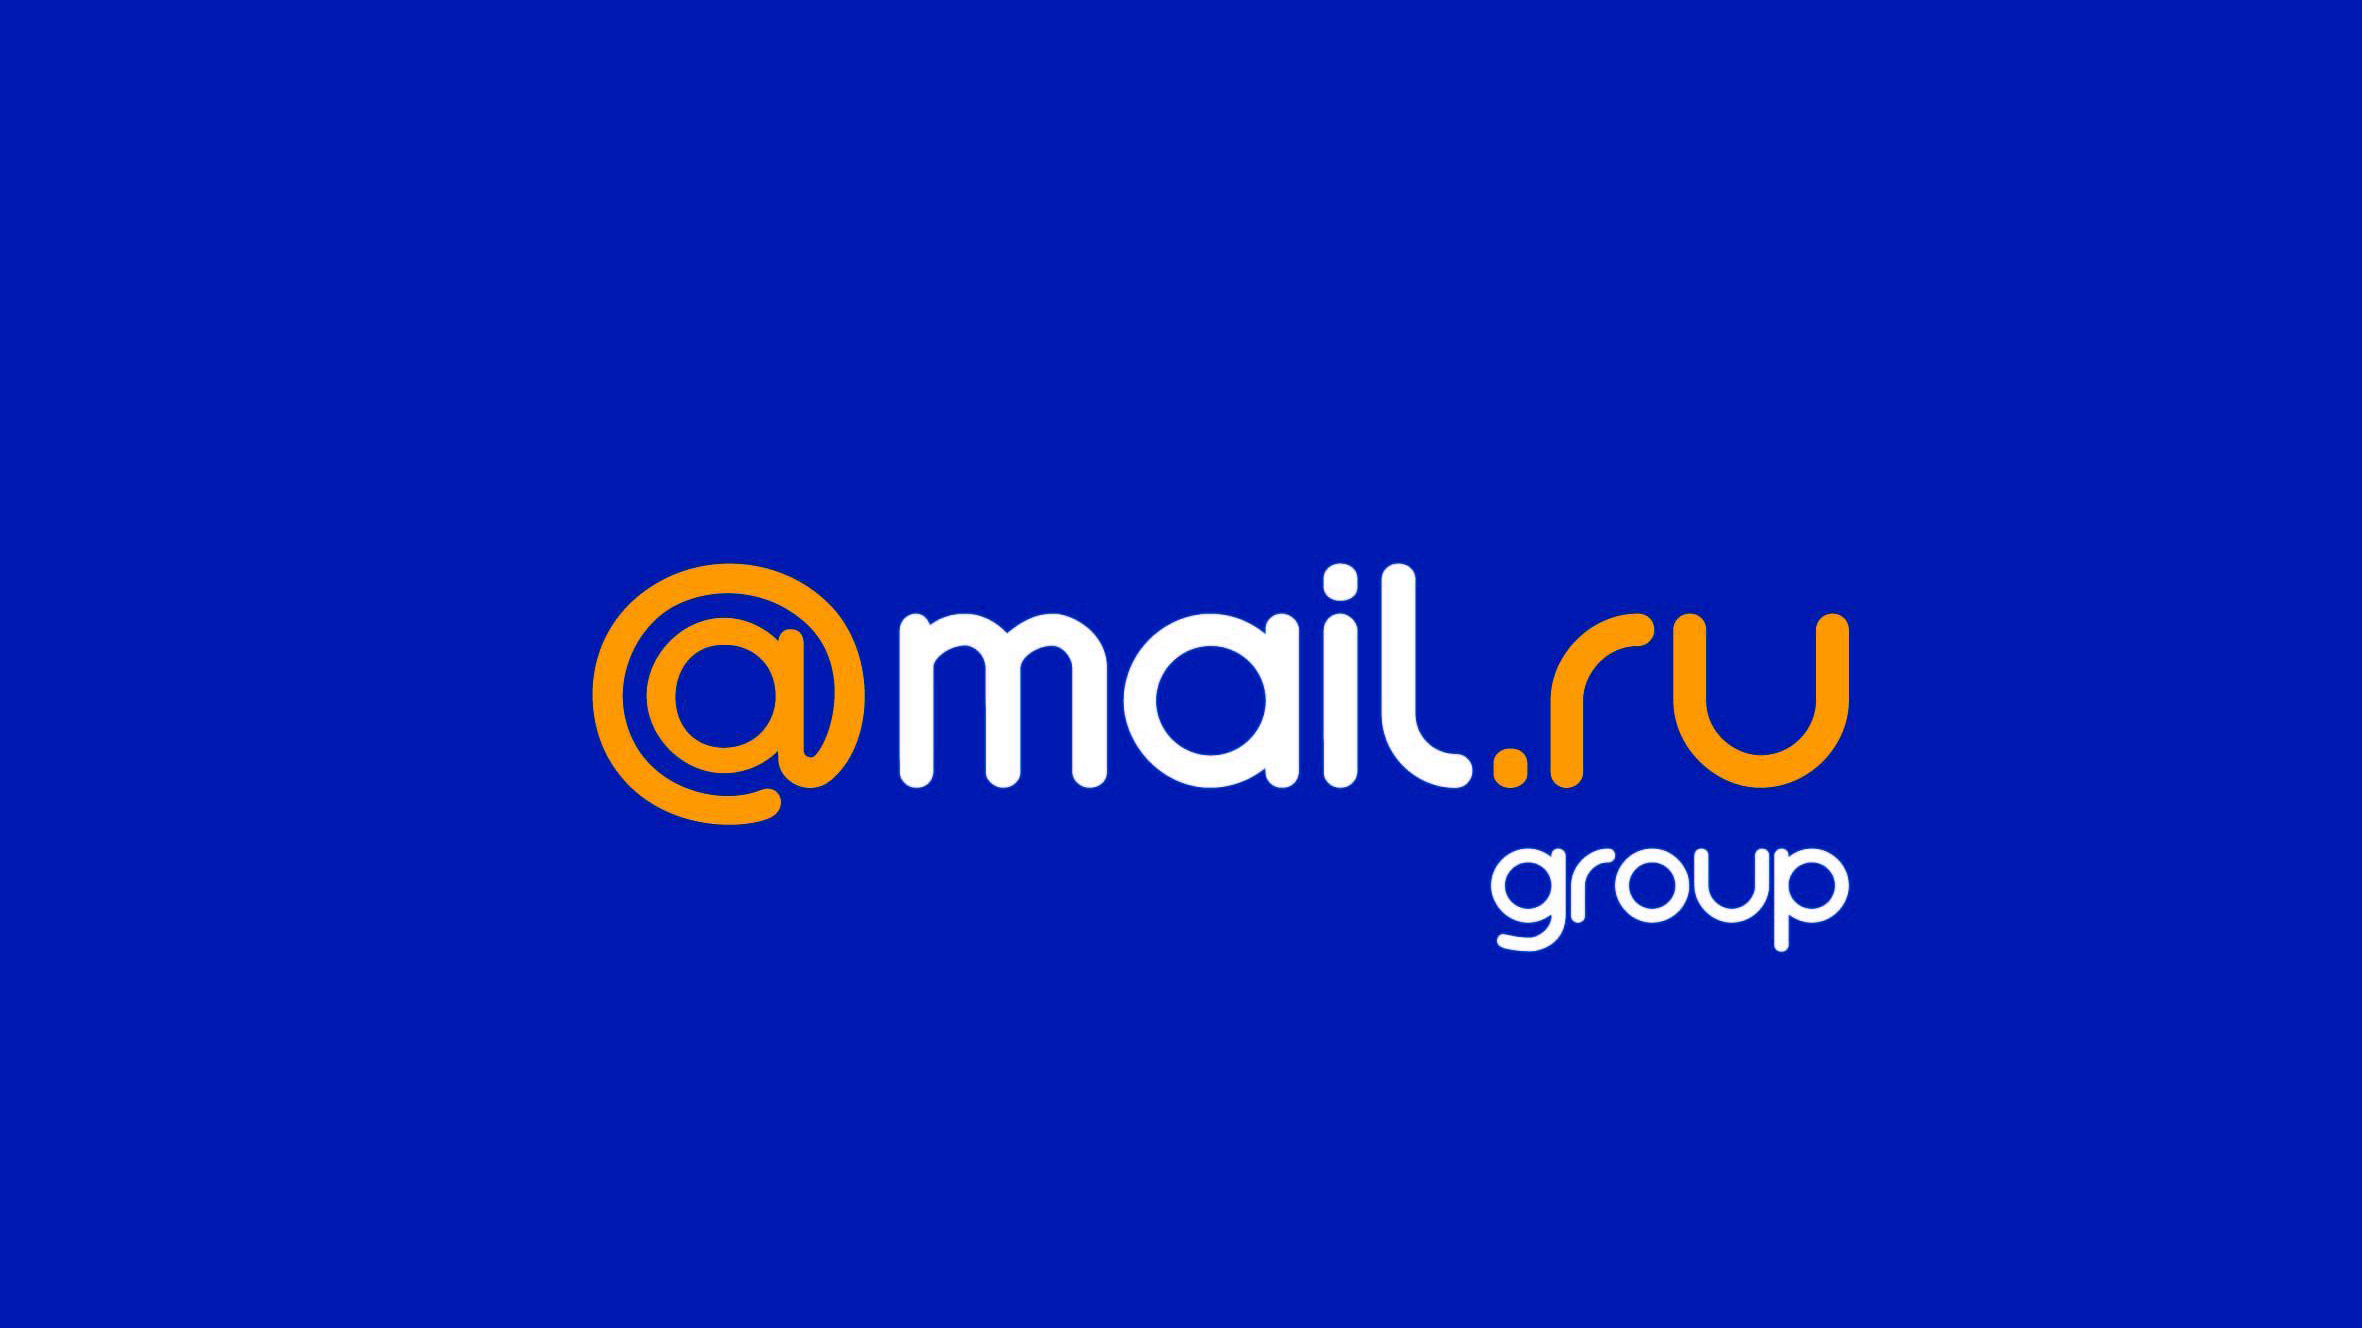 Mail co ru. Mail.ru Group логотип. Почта майл ру. Логотип почты майл ру.